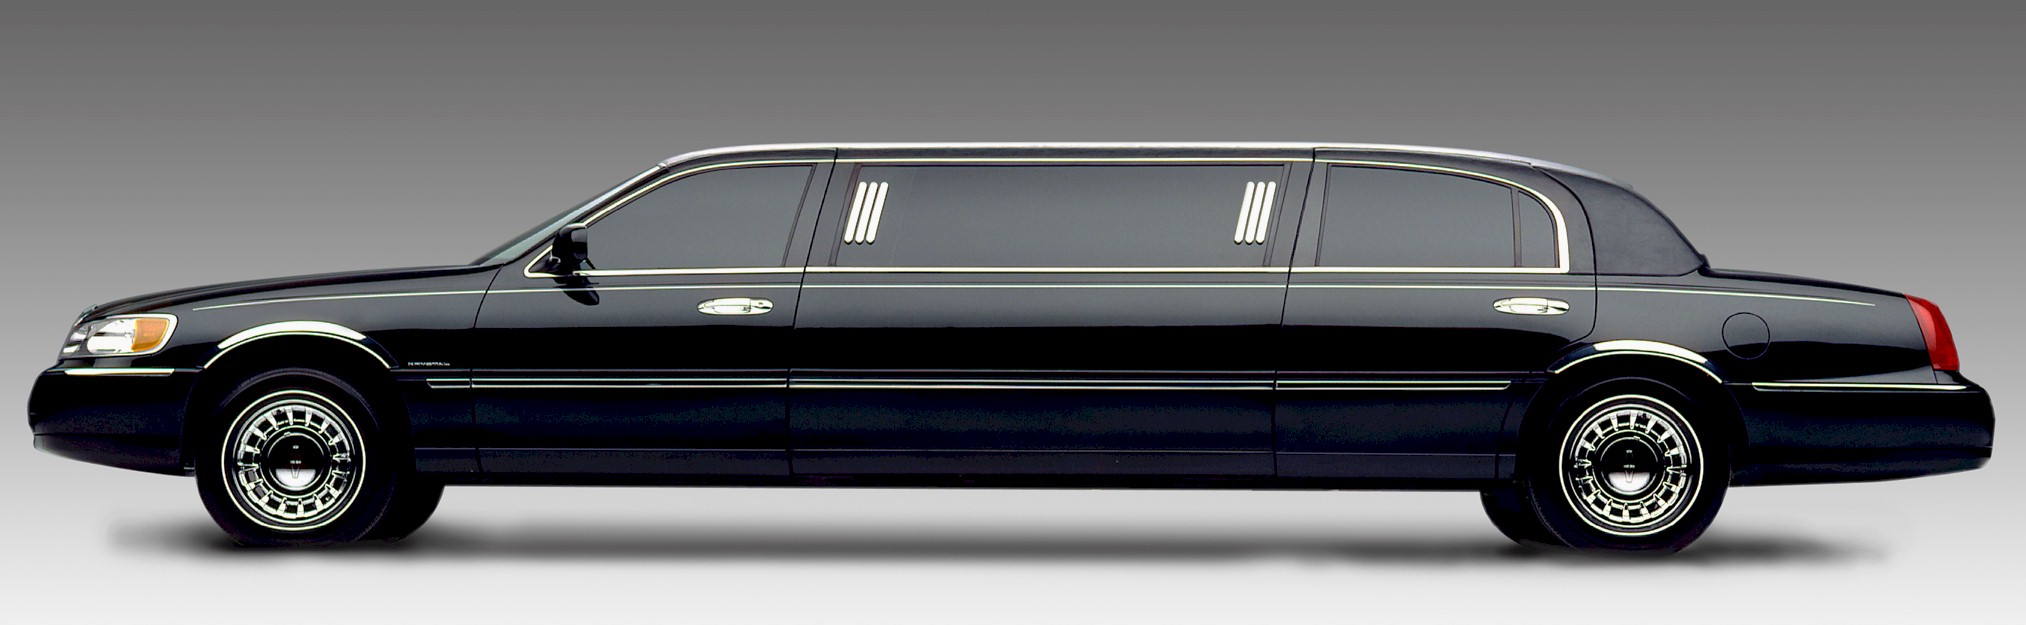 2005 Rolls Royce Phantom Luxury Limousine 